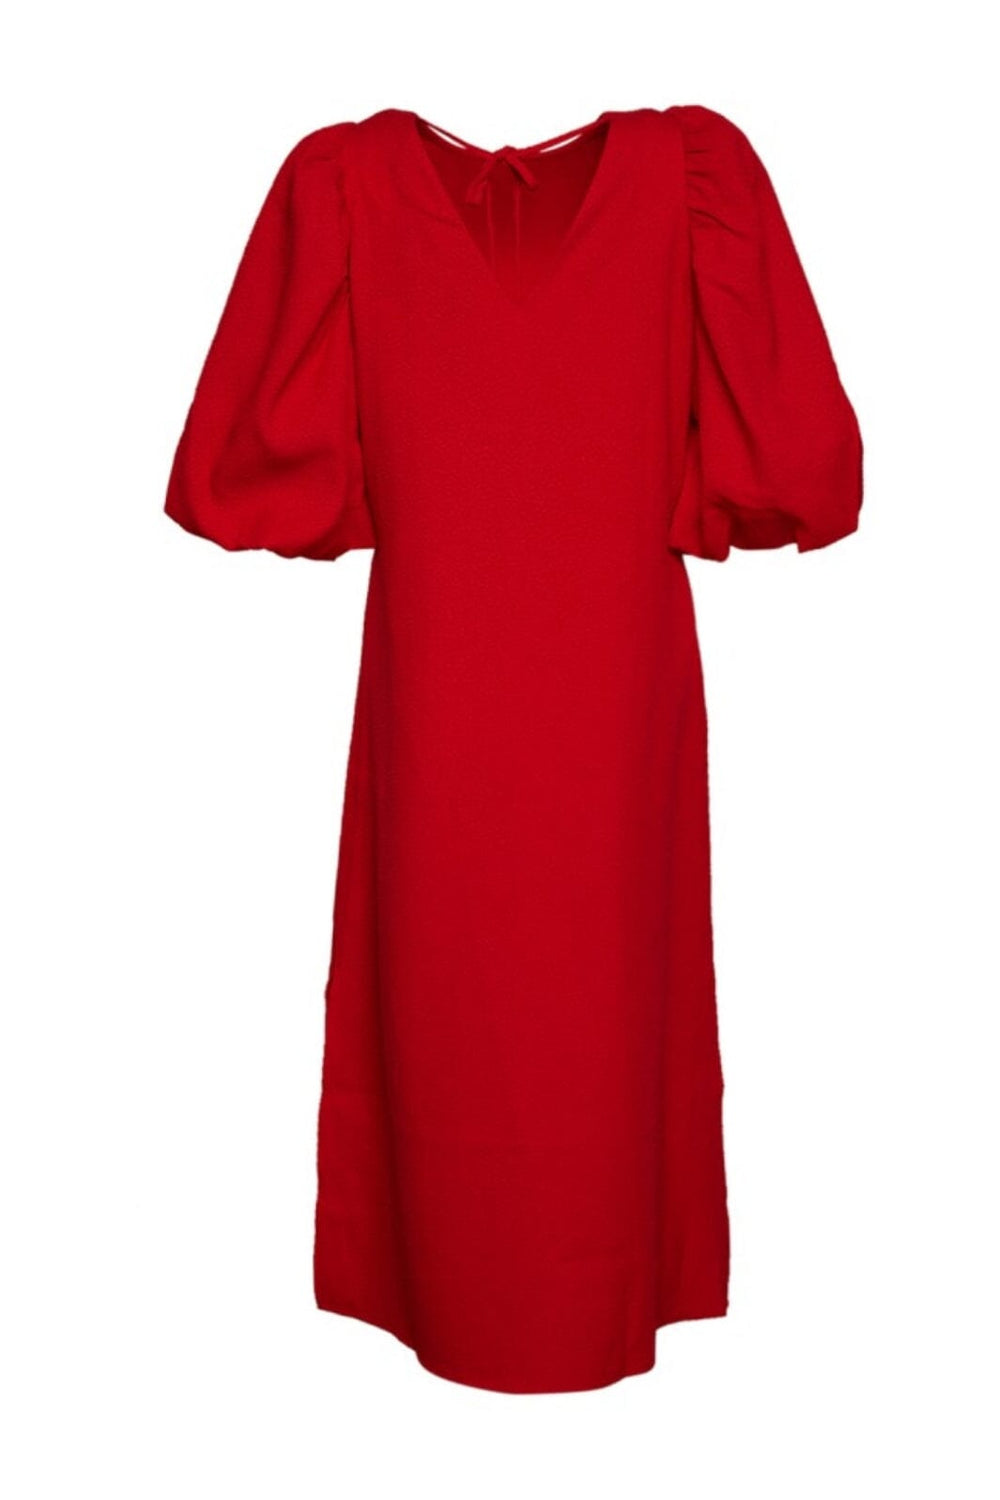 Noella - Pastis Long Dress - Electric Red 